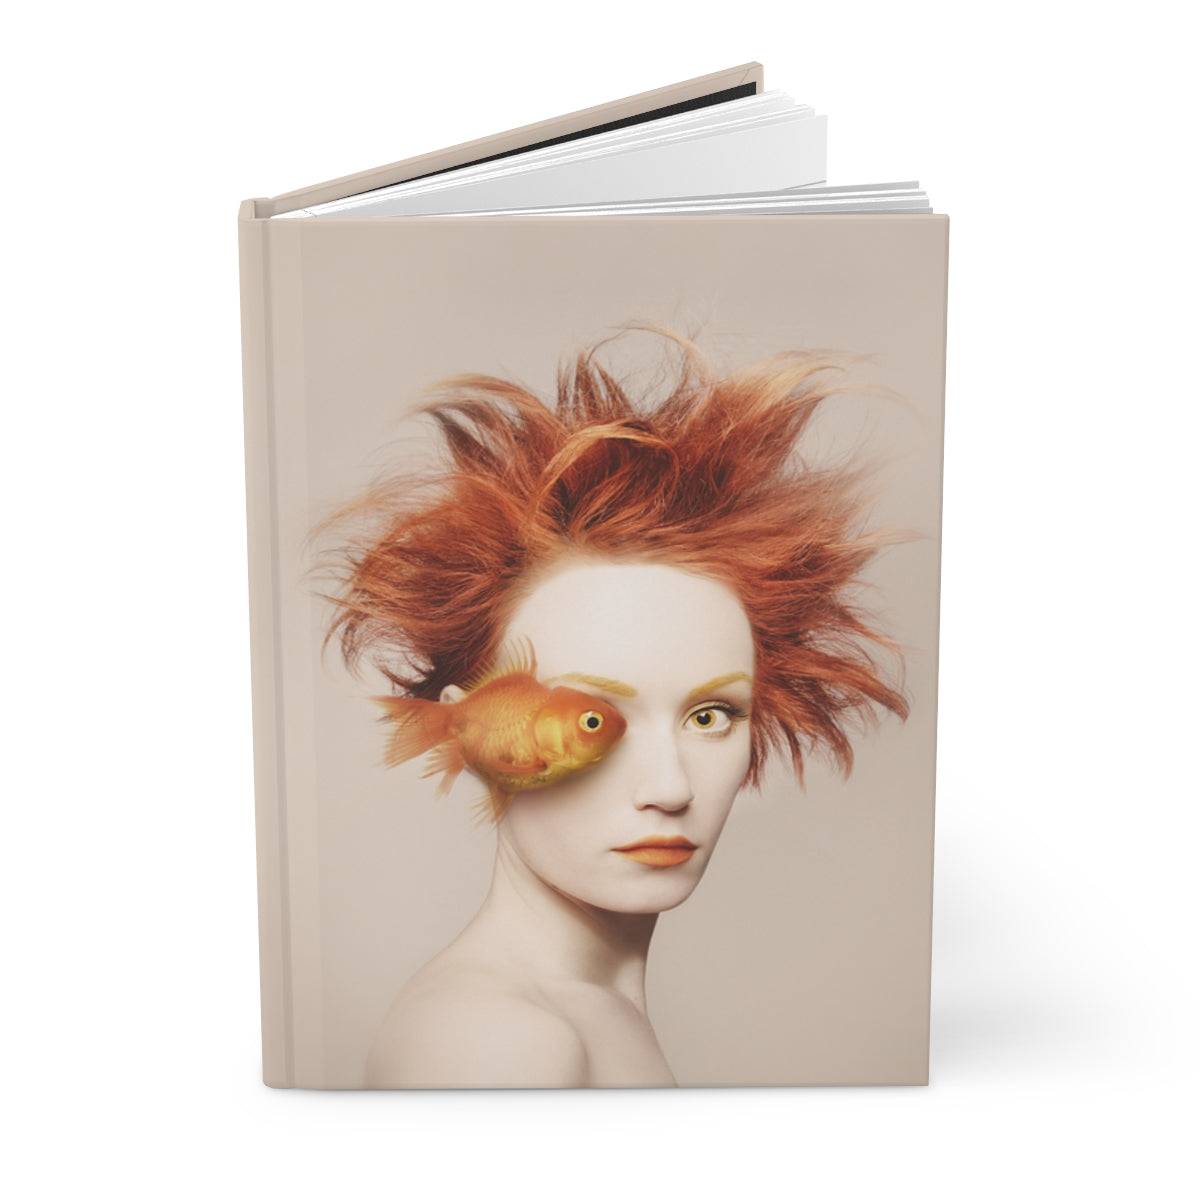 Orange fish on woman's portrait sharing eyes notebook